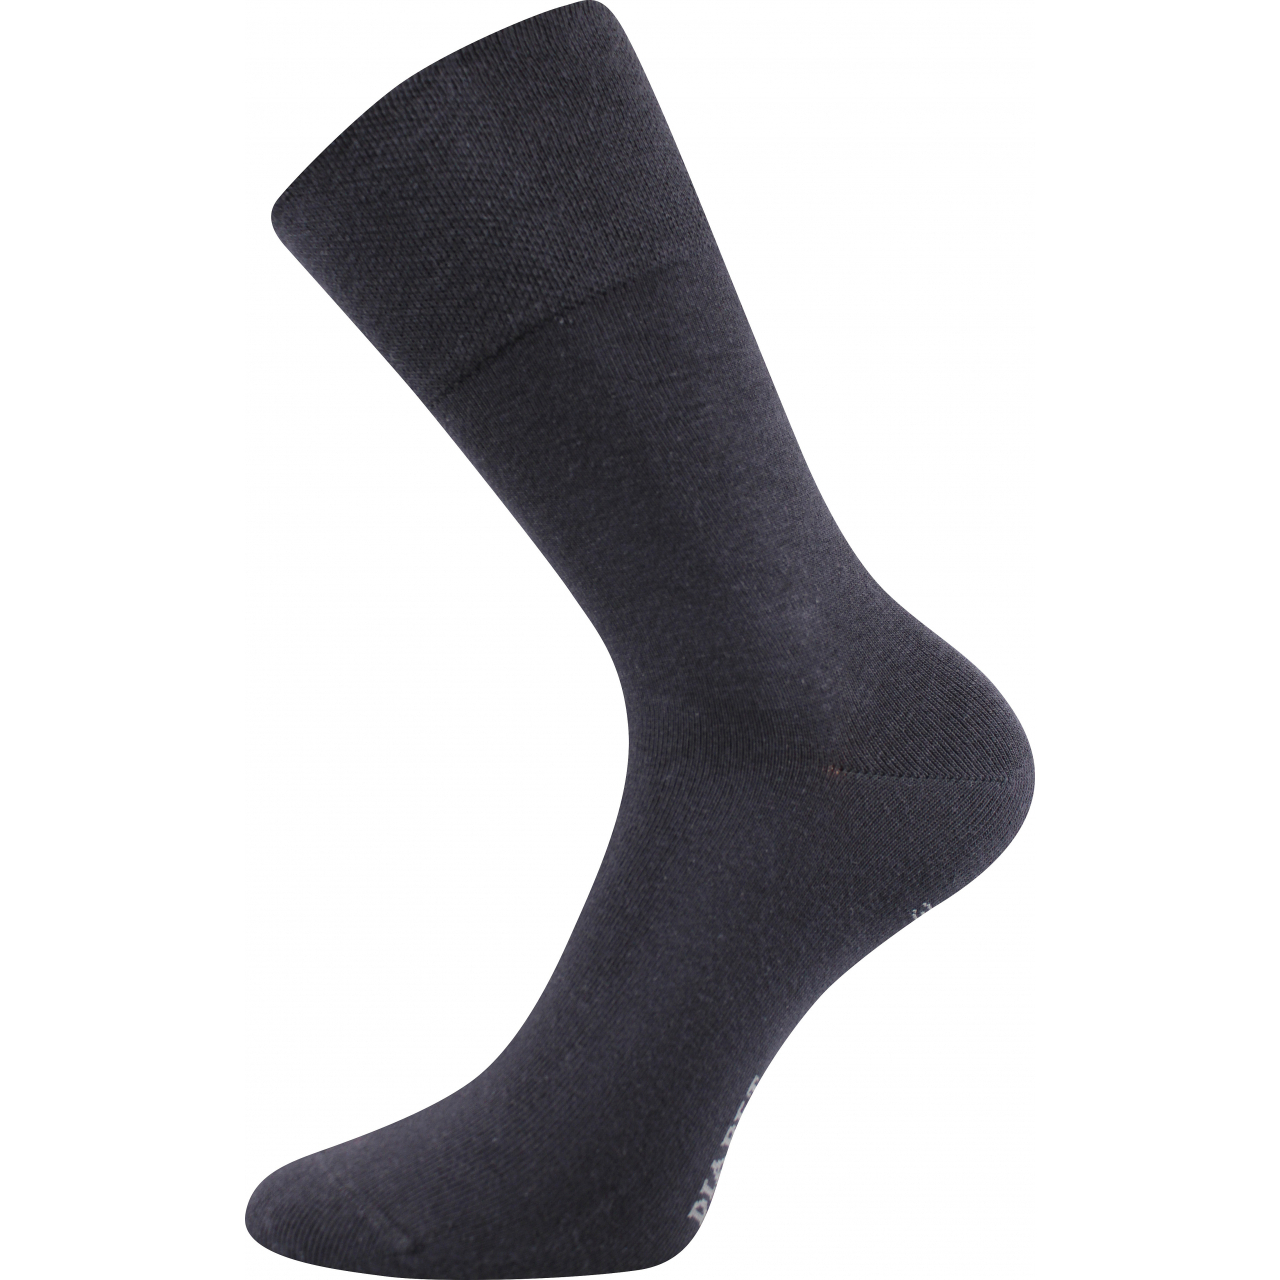 Ponožky klasické unisex Lonka Diagram - tmavě šedé, 35-38